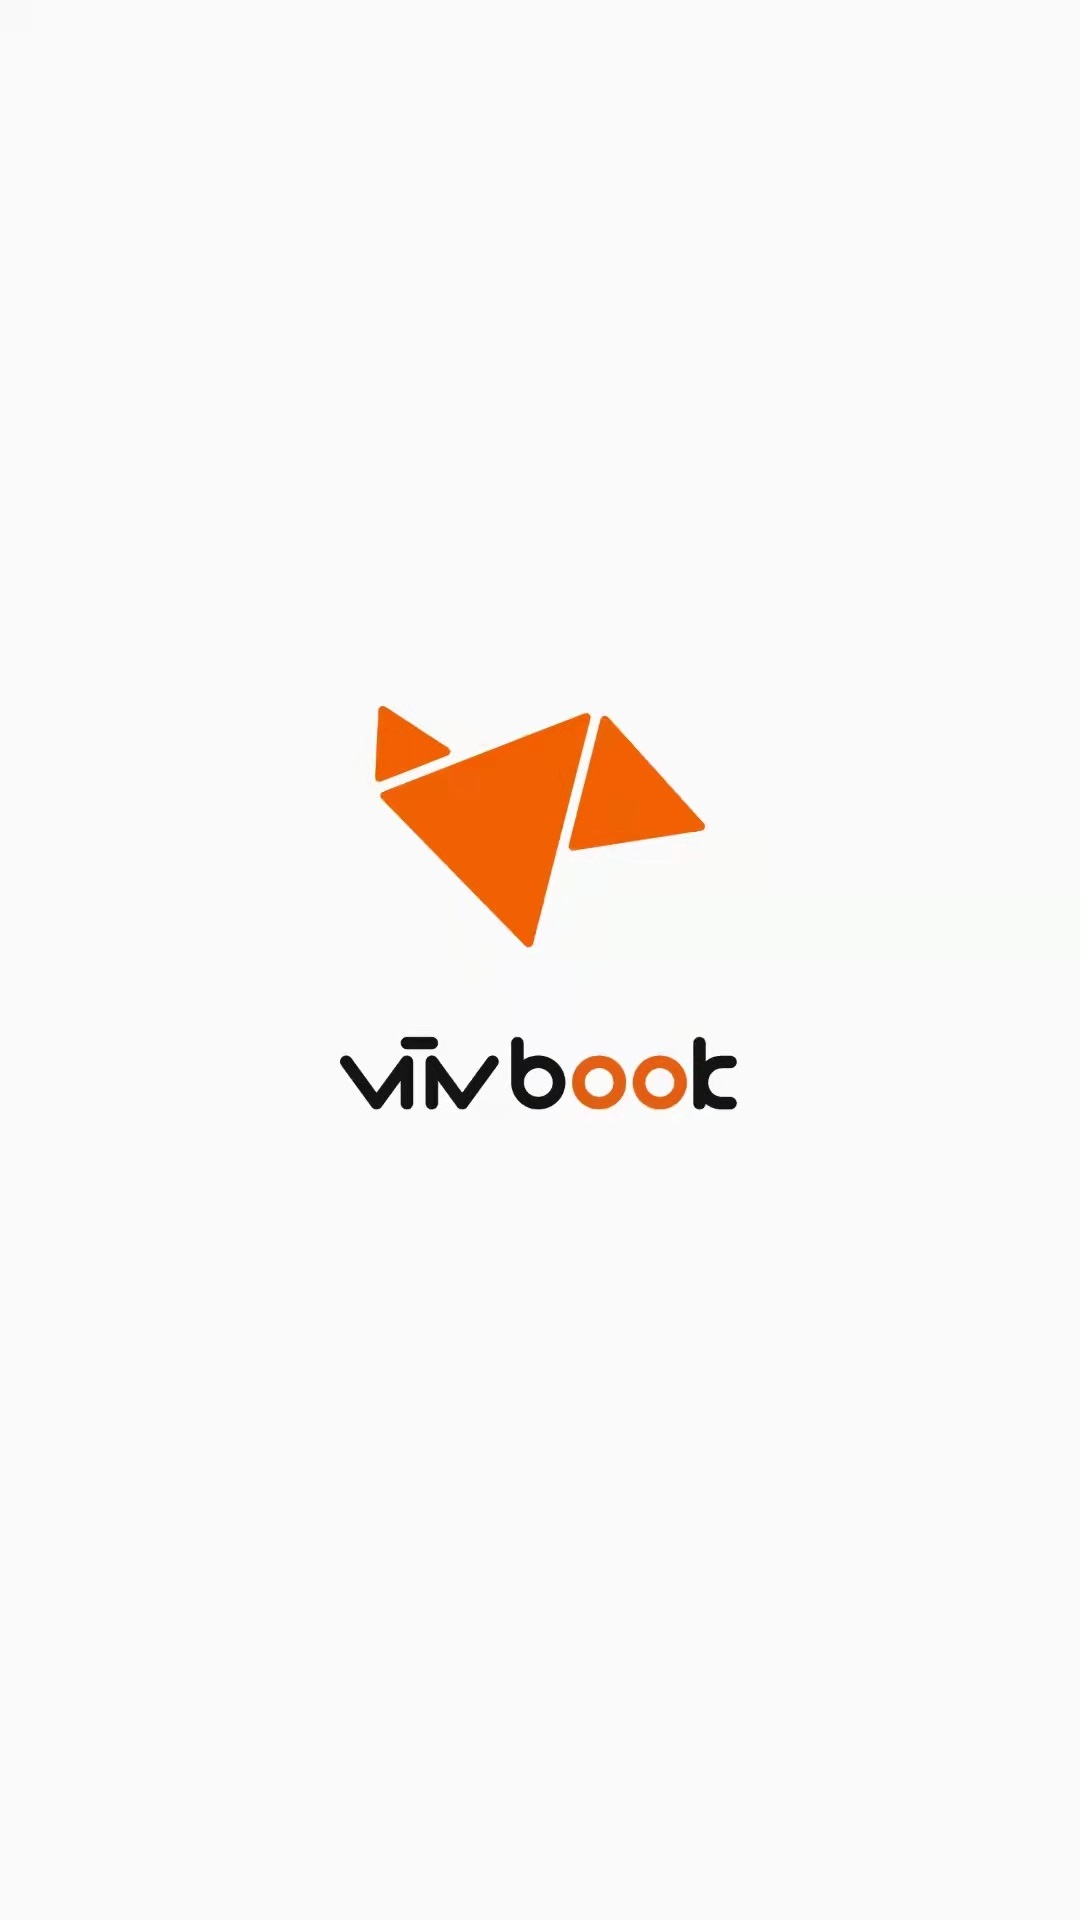 viivbook